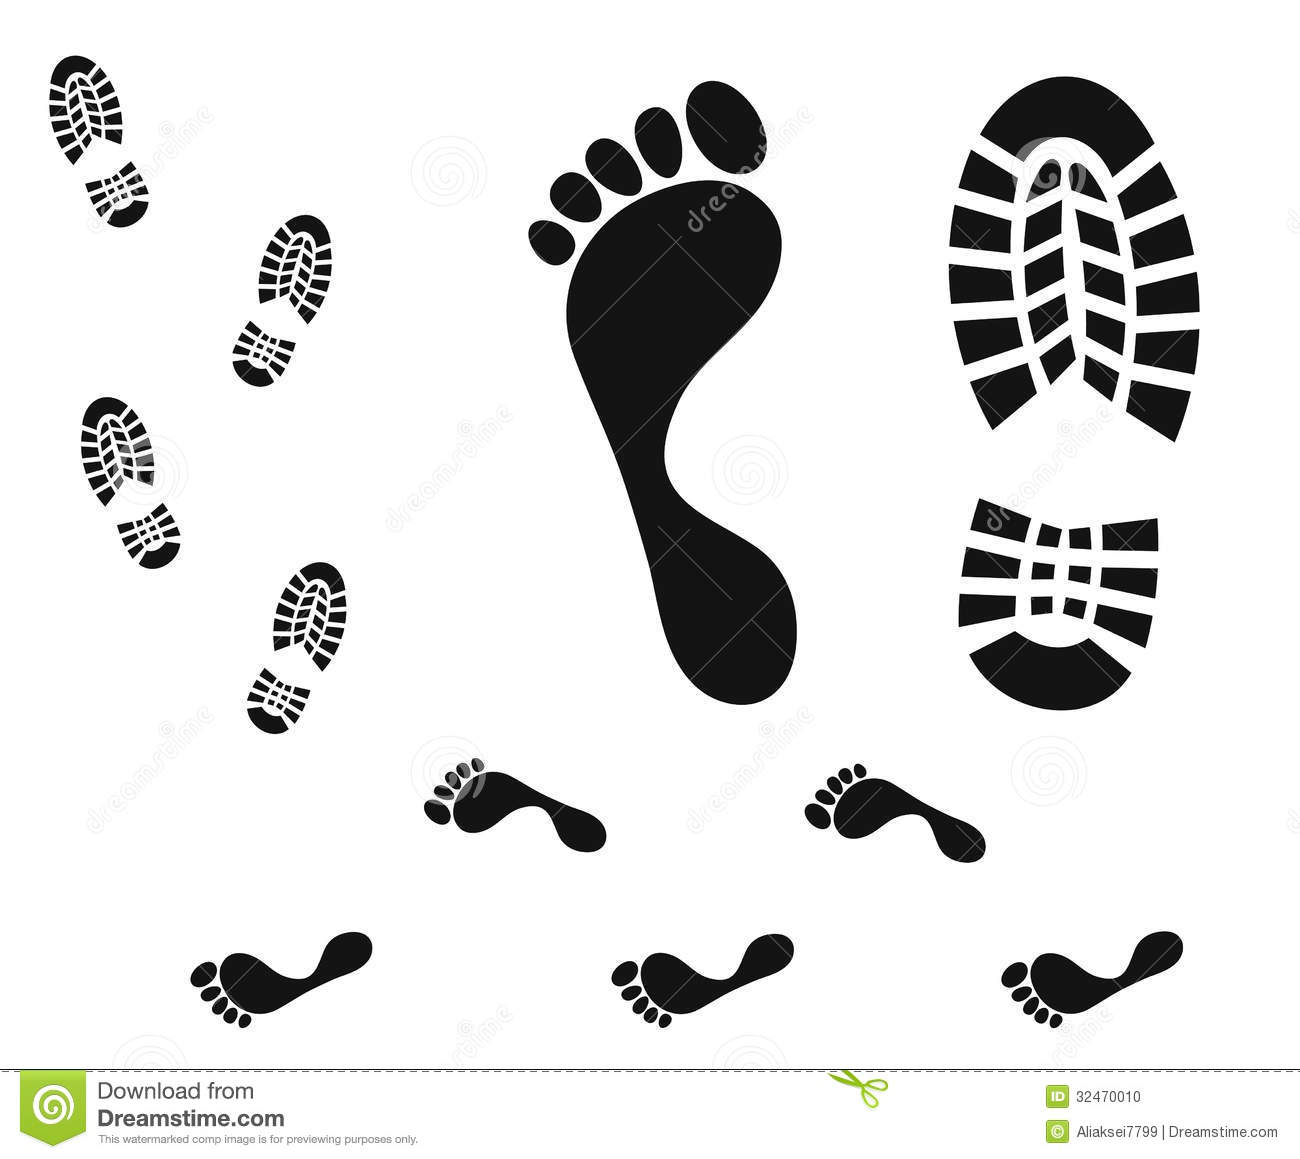 8 Free Footprint Vector Images